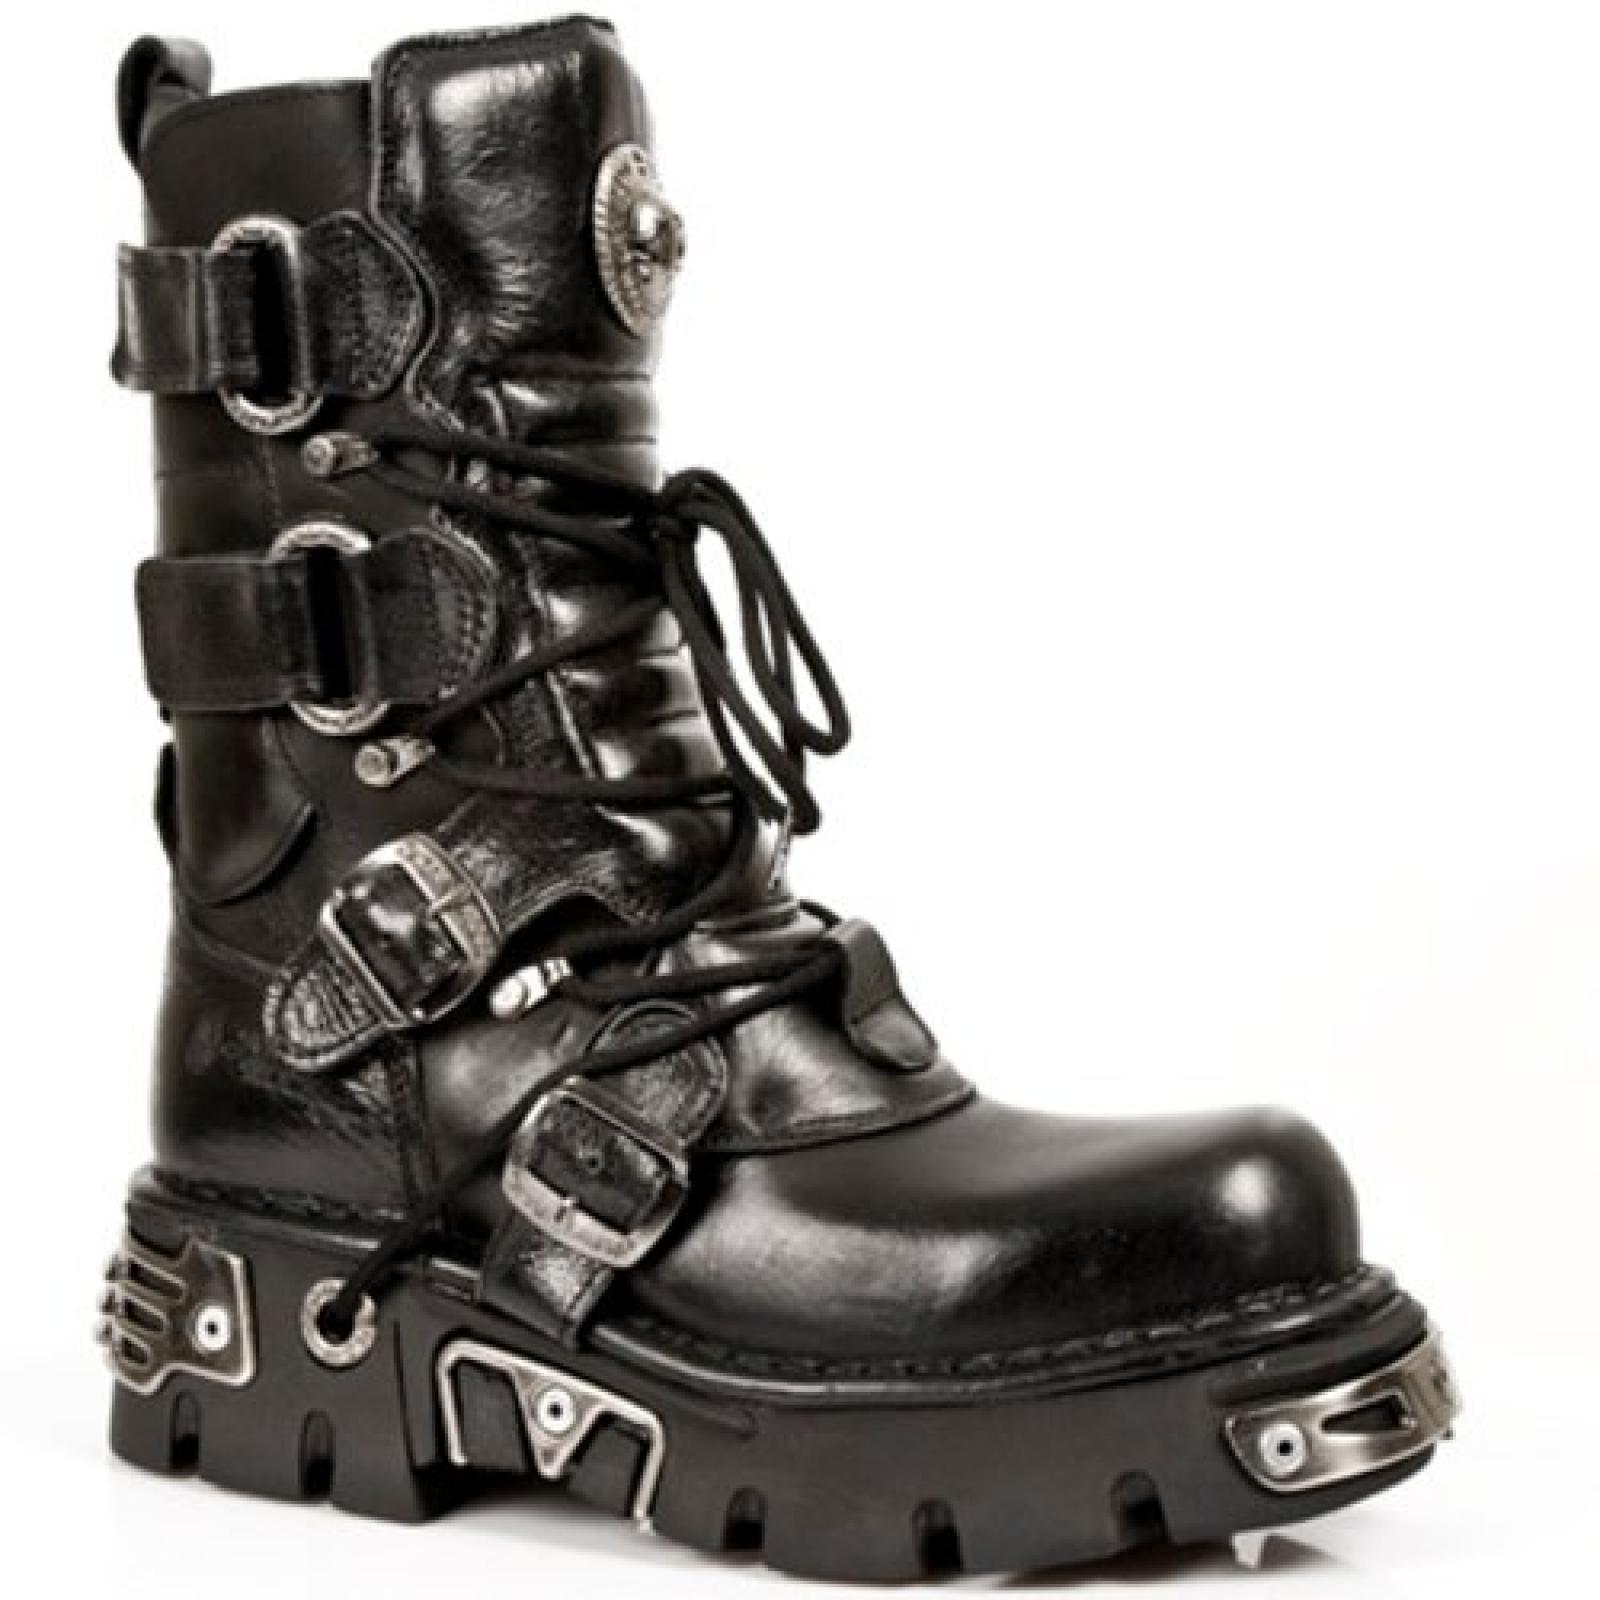 New Rock Boots Unisex Stiefel - Style 575 S1 schwarz 